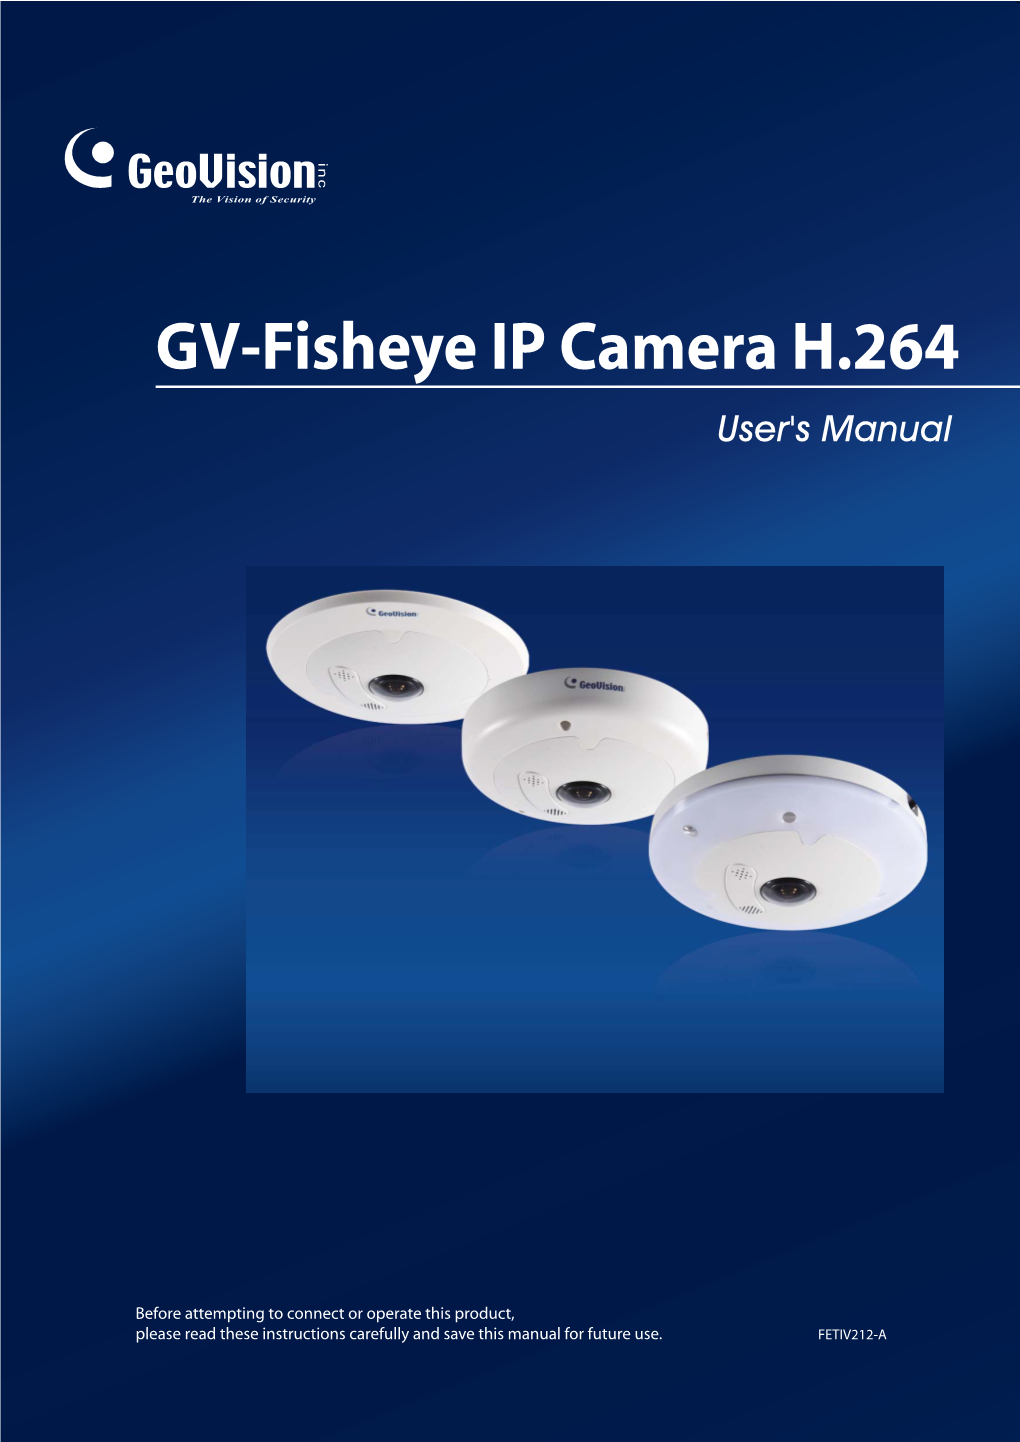 GV-Fisheye IP Camera H.264 User's Manual